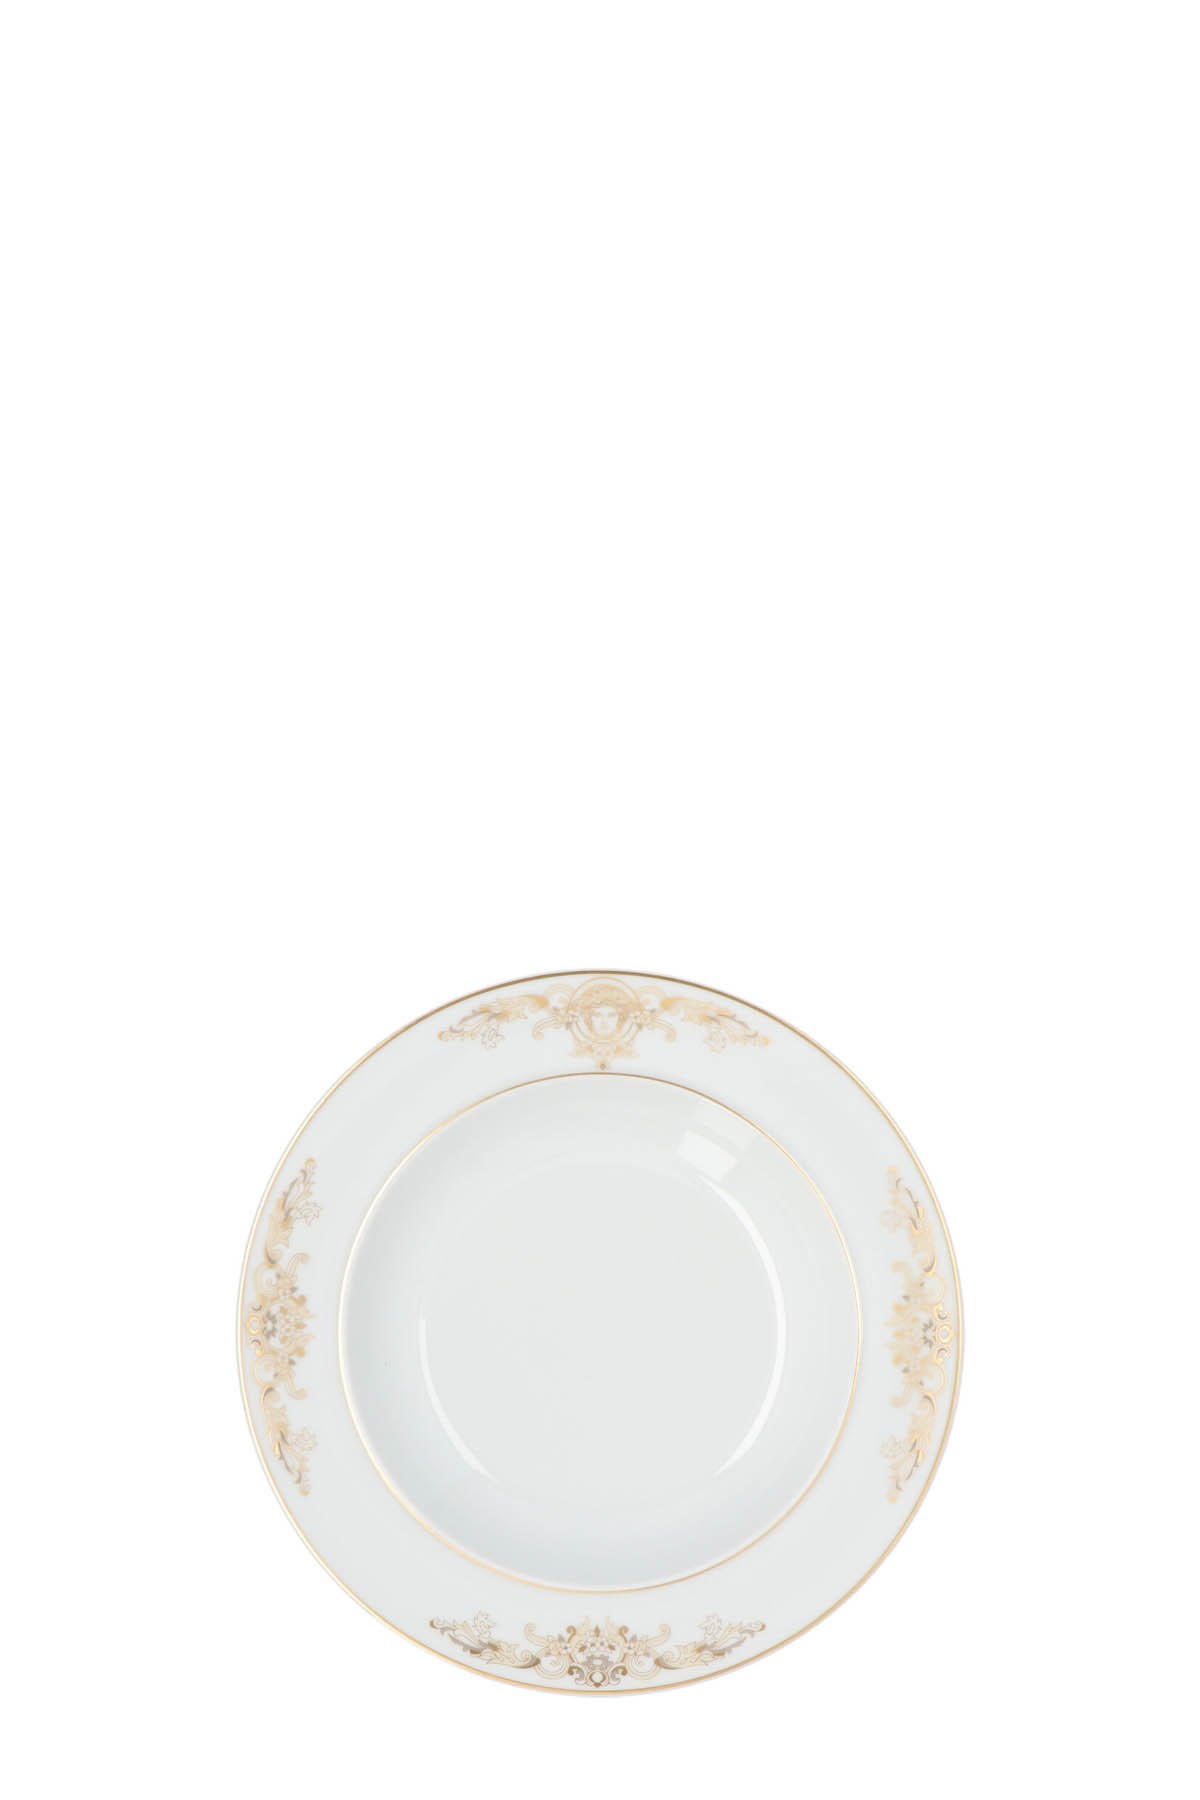 VERSACE HOME 'Versace Baroque’ Plate